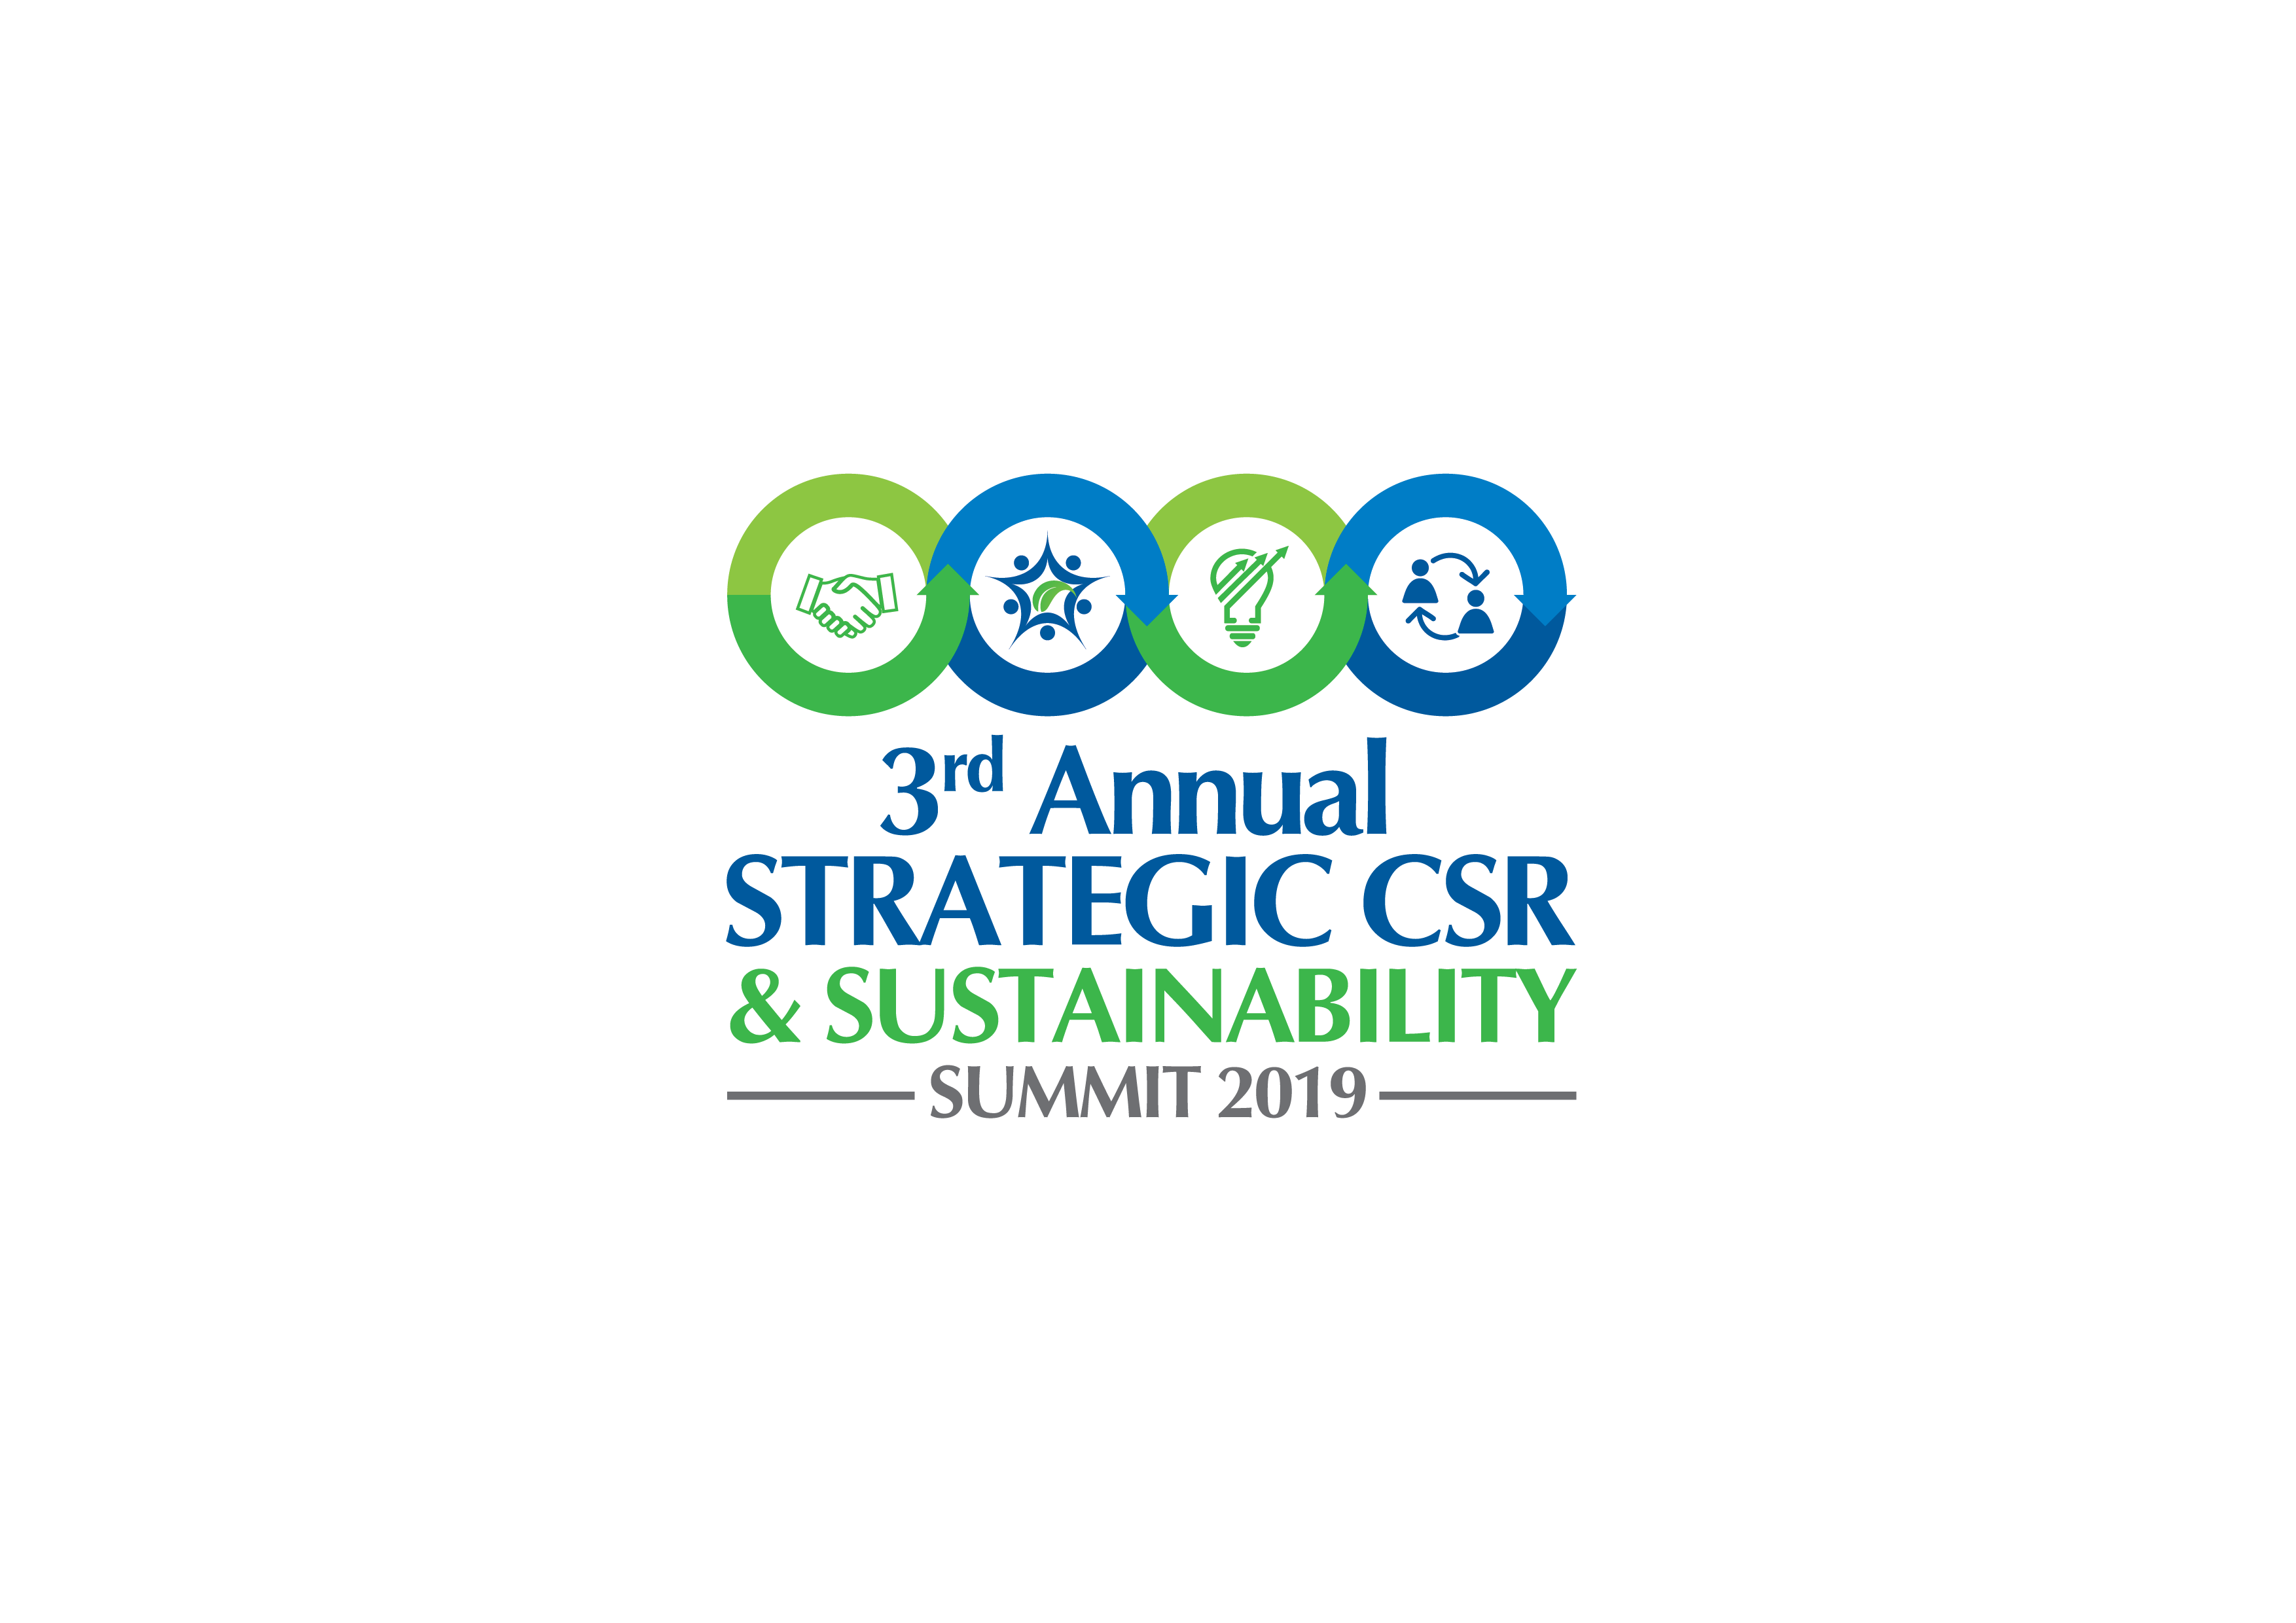 3rd Annual Strategic CSR & Sustainability Summit 2019, Mumbai, Maharashtra, India